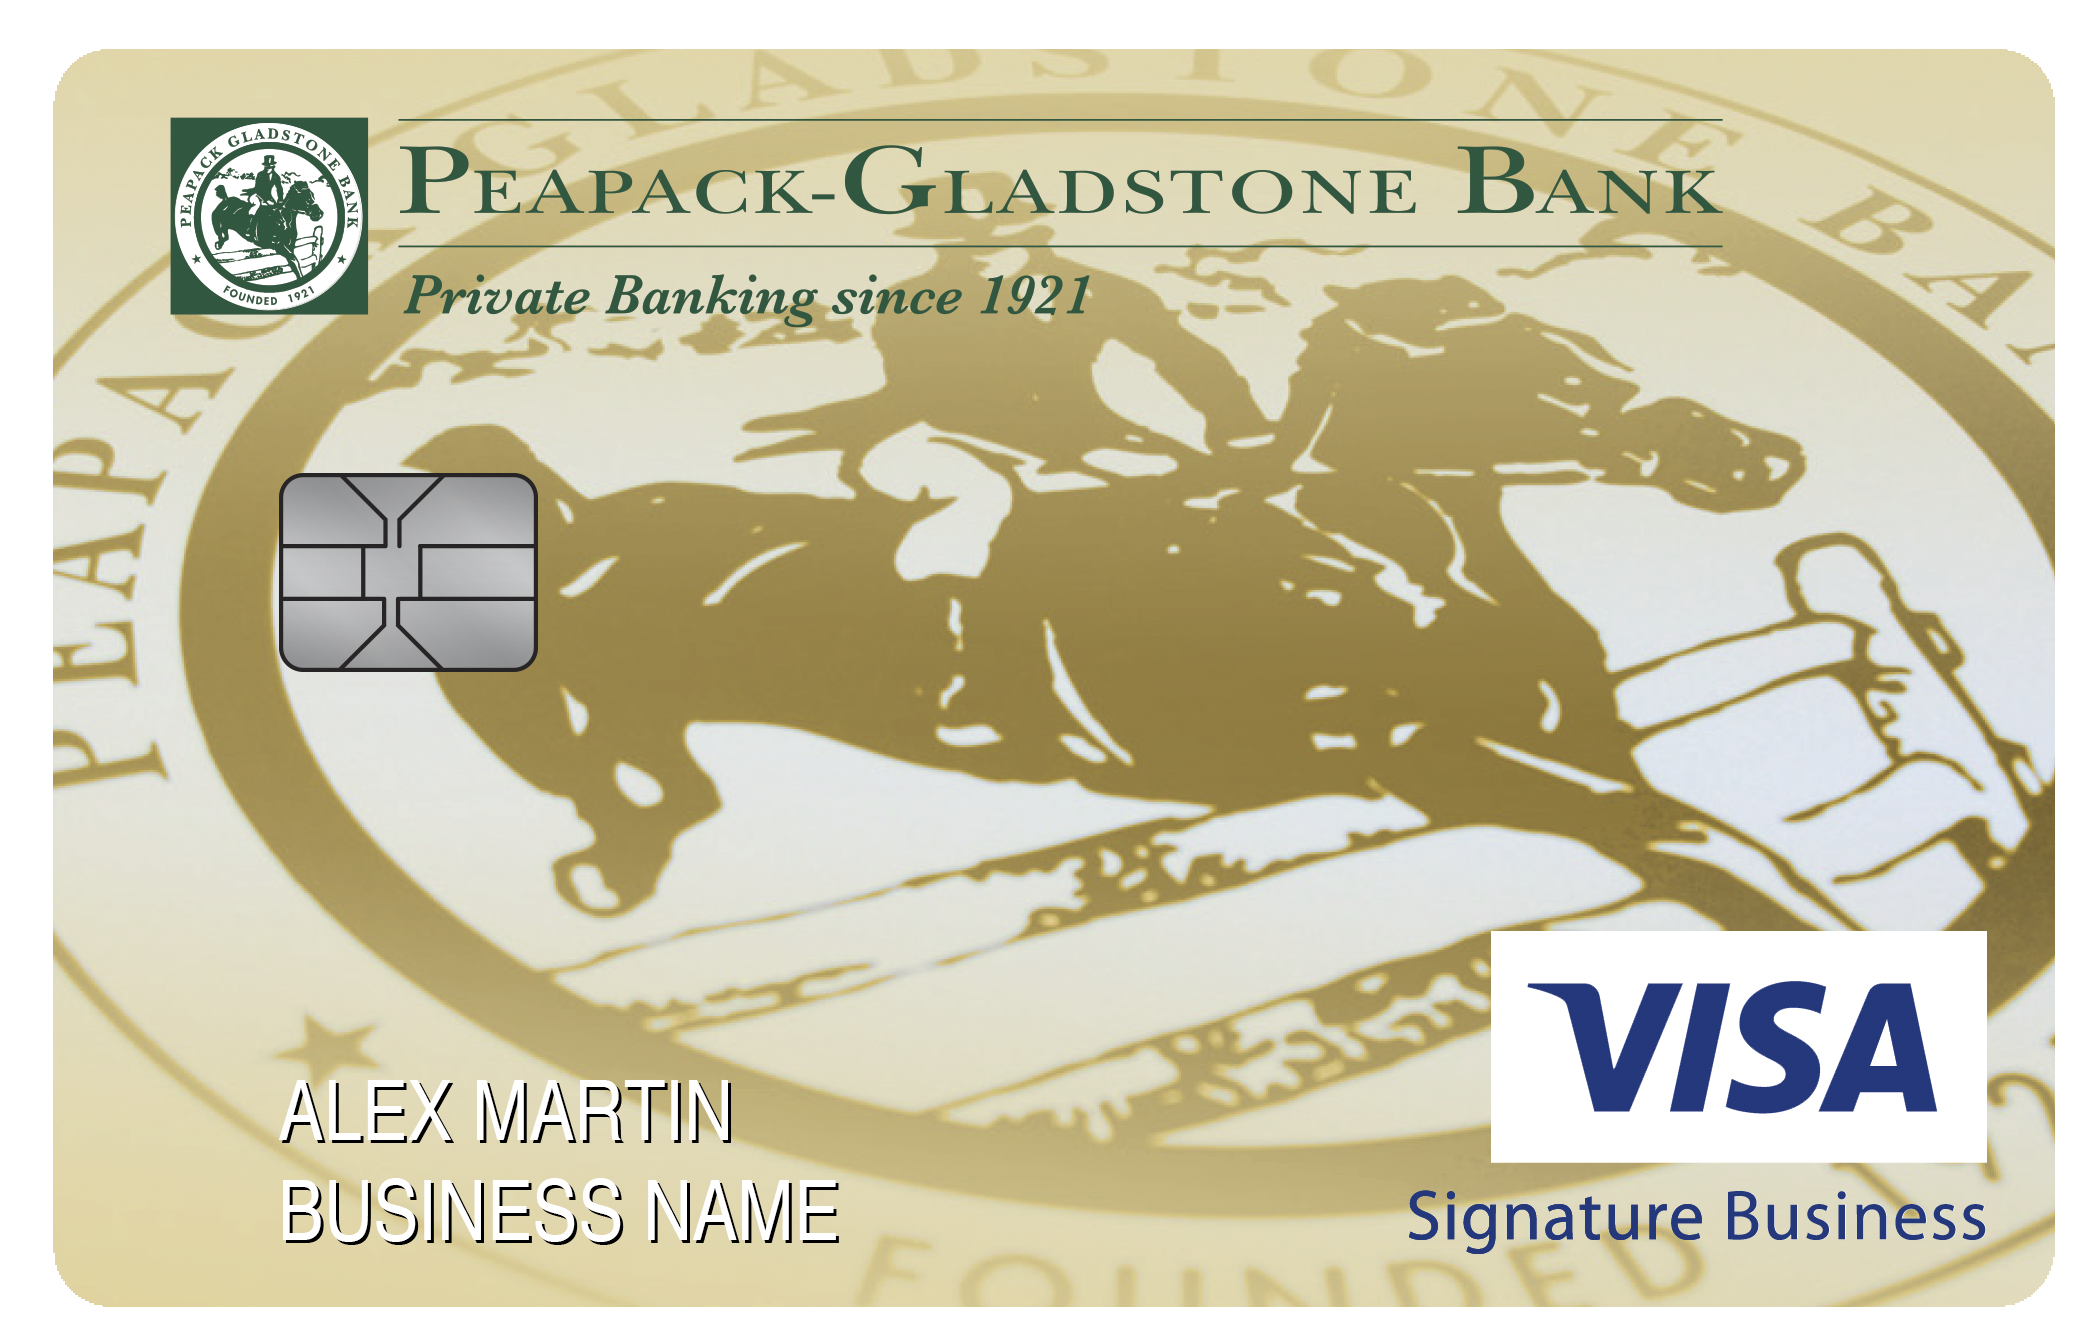 Peapack-Gladstone Bank Smart Business Rewards Card